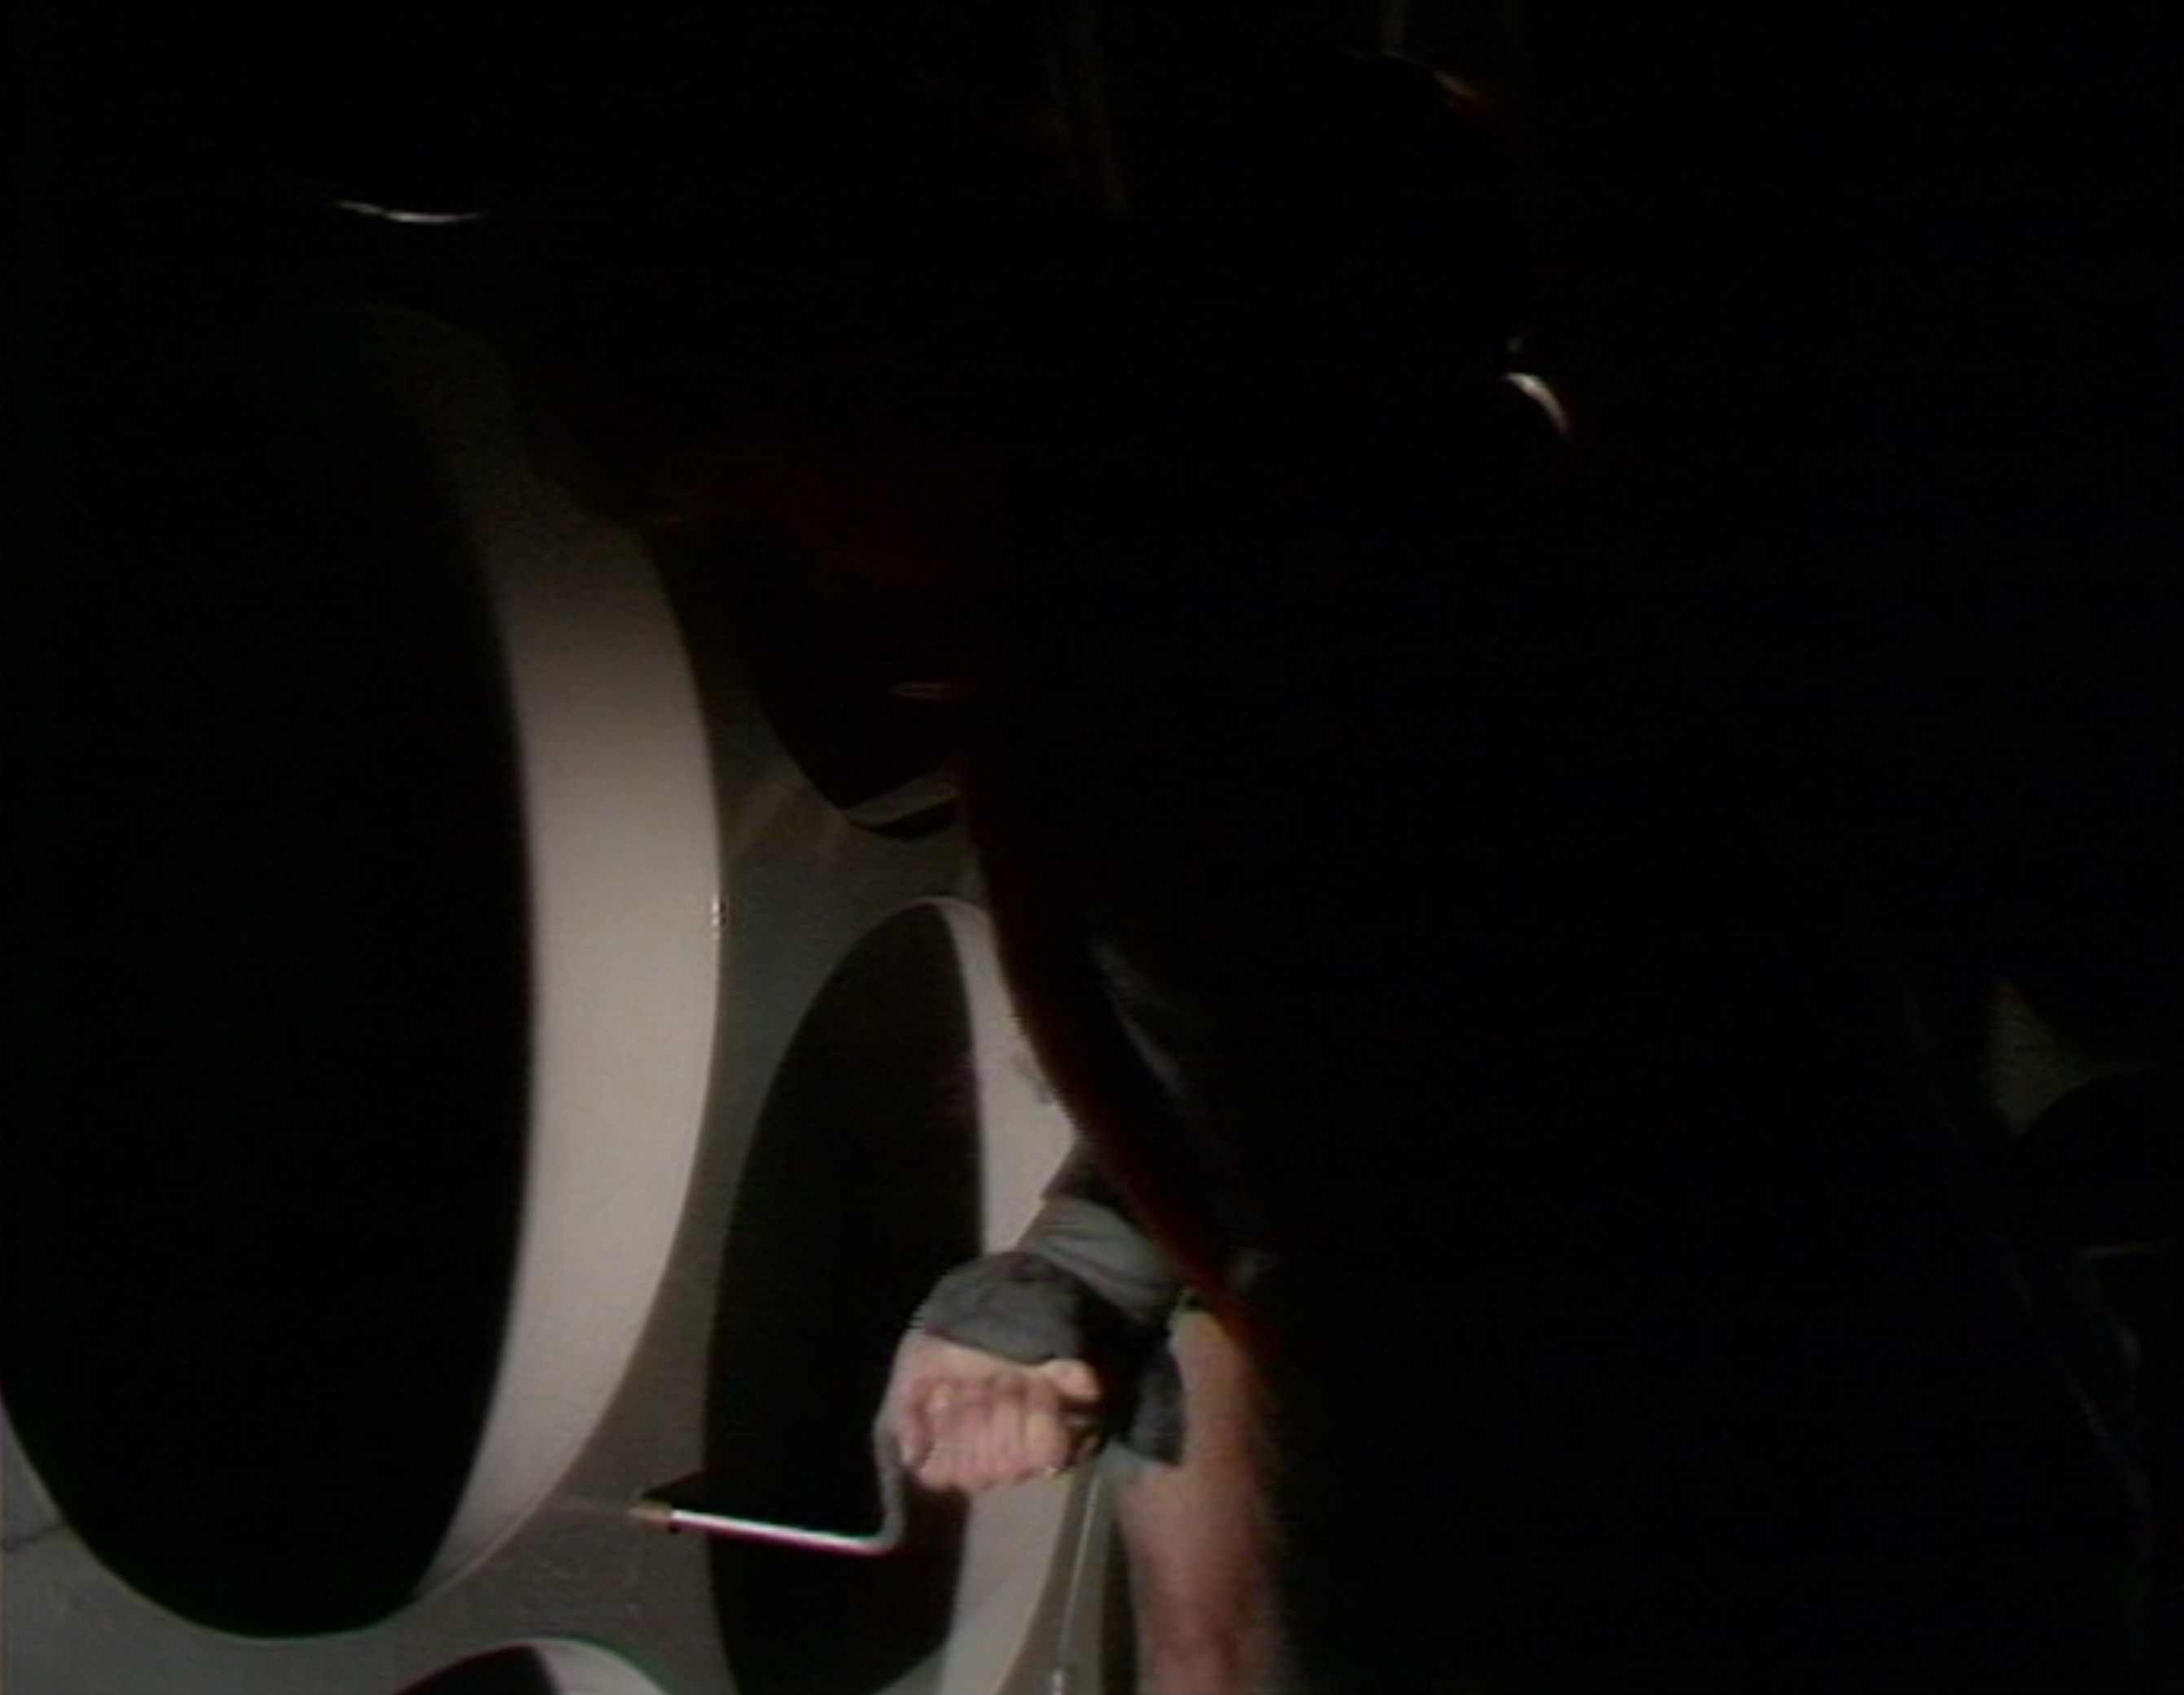 The Third Doctor uses the TARDIS door handle. (TV: Death to the Daleks [+]Loading...["Death to the Daleks (TV story)"])